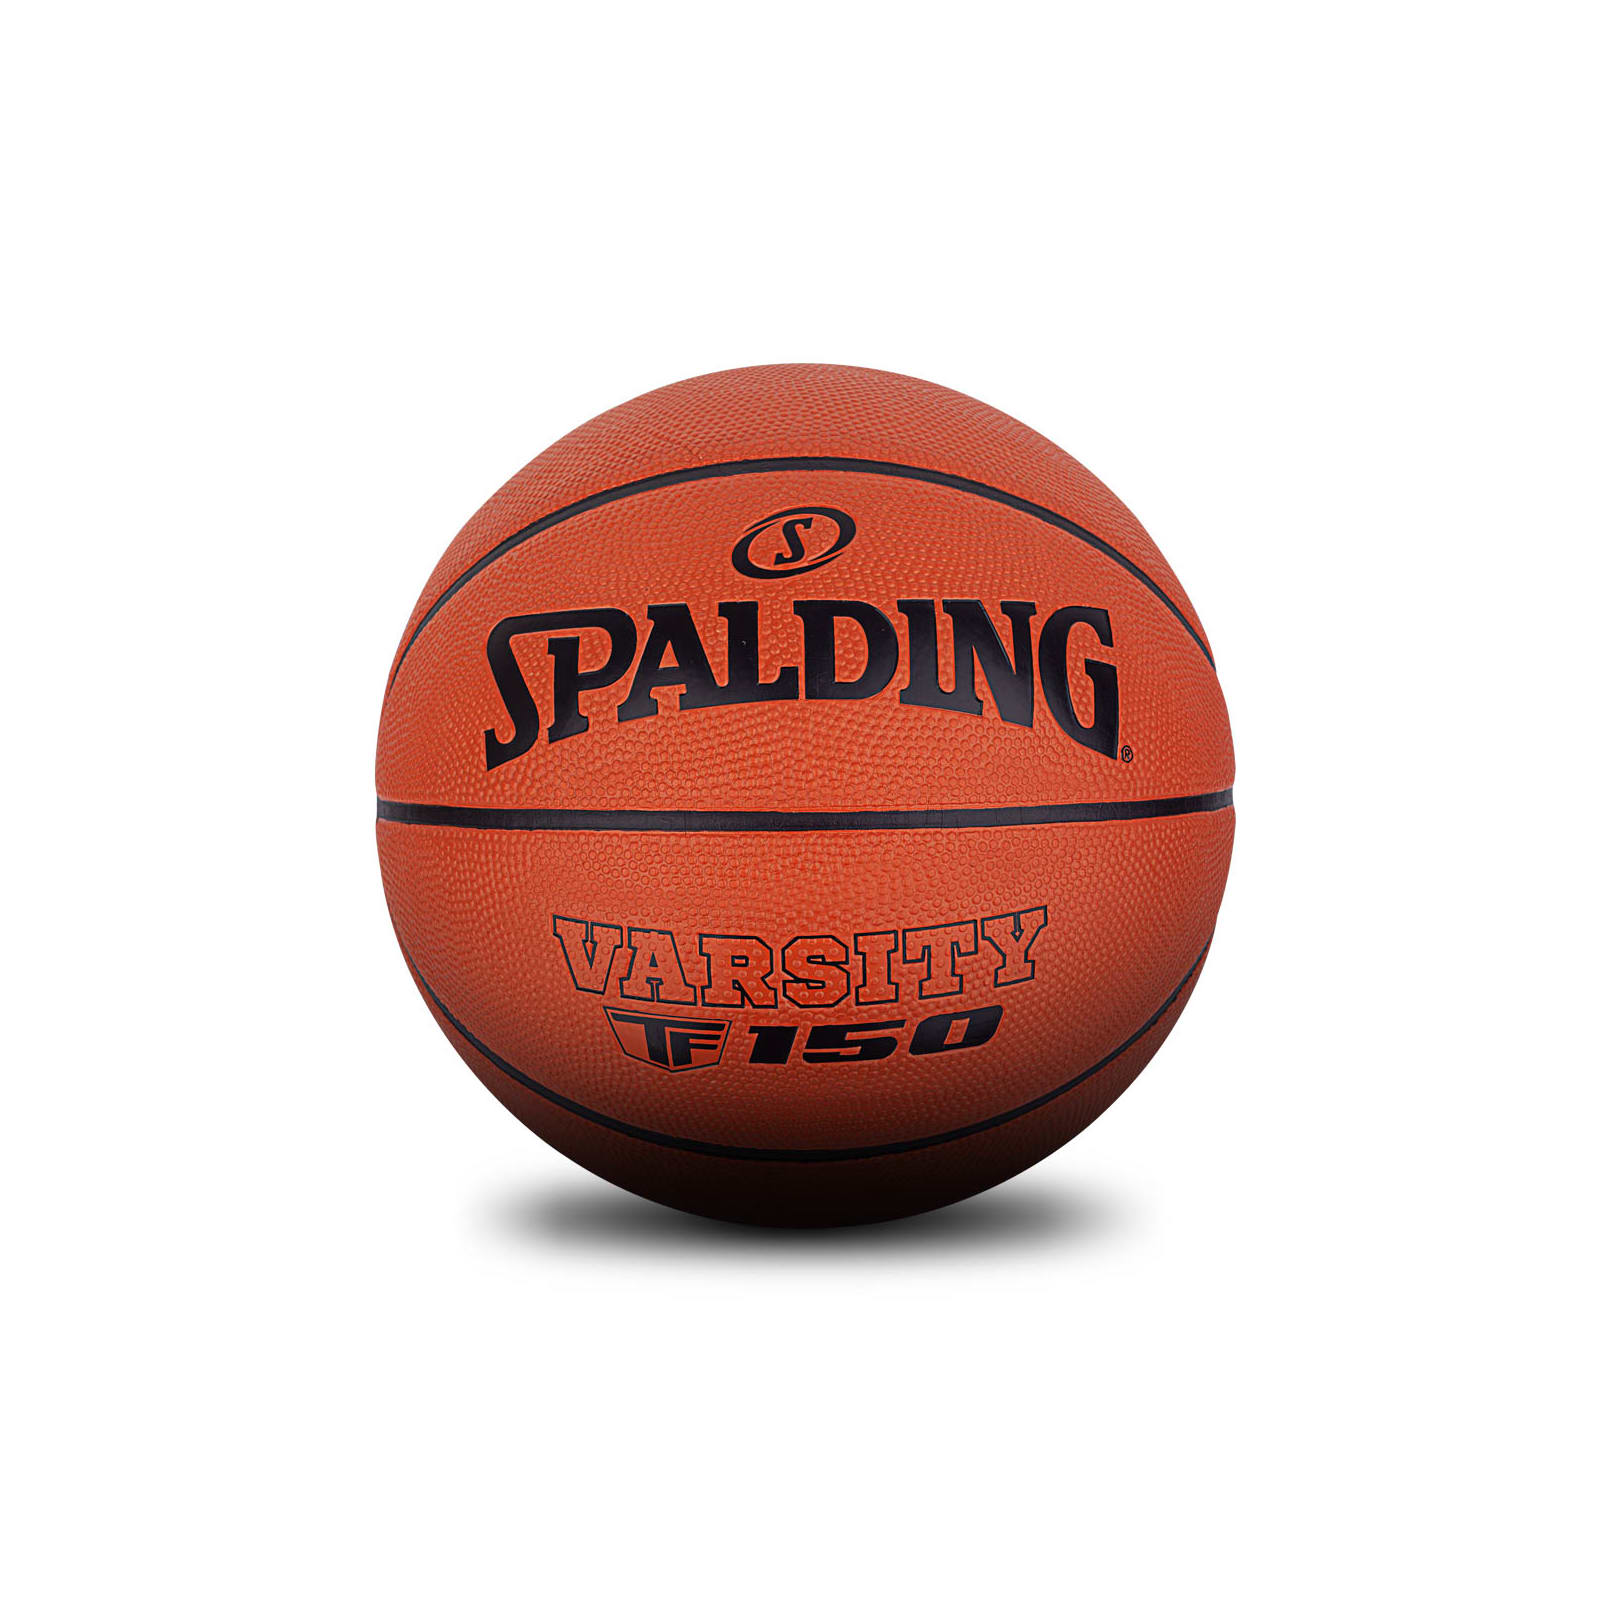 Spalding Varsity TF-150 Basketball Size 6 Outdoor Ball 